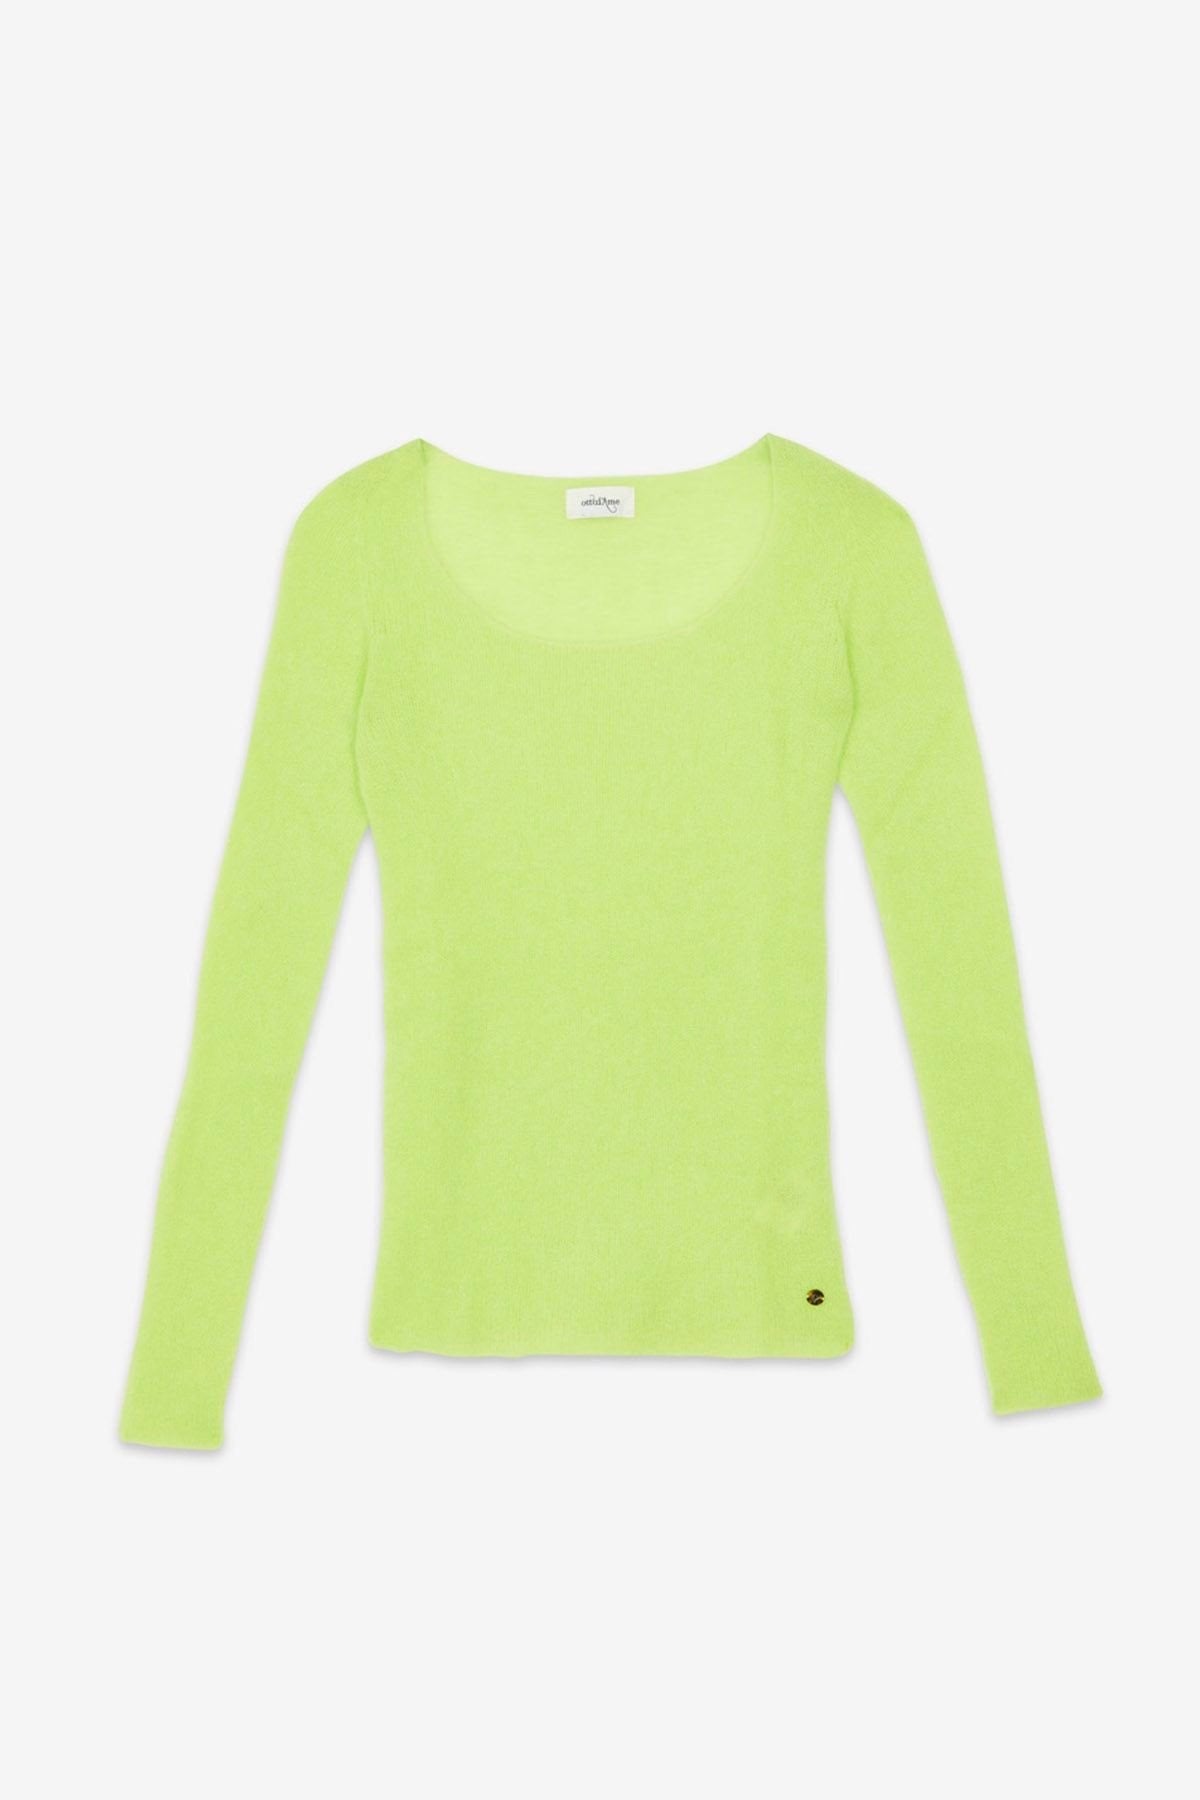 Ottod'ame- Mohair Blend Pullover: Florescent Green